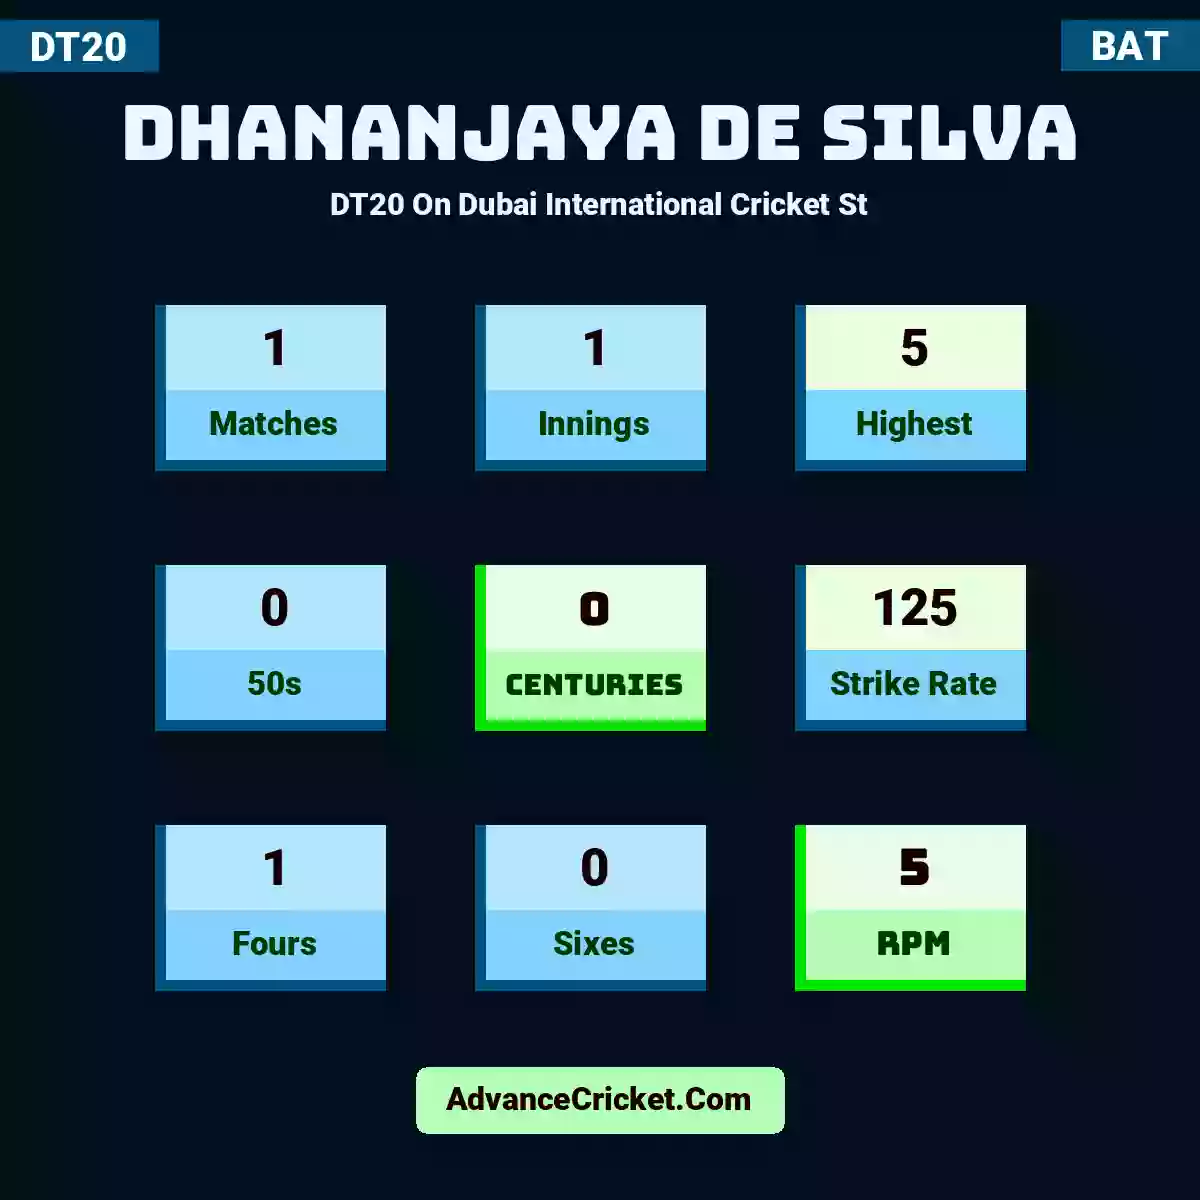 Dhananjaya de Silva DT20  On Dubai International Cricket St, Dhananjaya de Silva played 1 matches, scored 5 runs as highest, 0 half-centuries, and 0 centuries, with a strike rate of 125. D.Silva hit 1 fours and 0 sixes, with an RPM of 5.